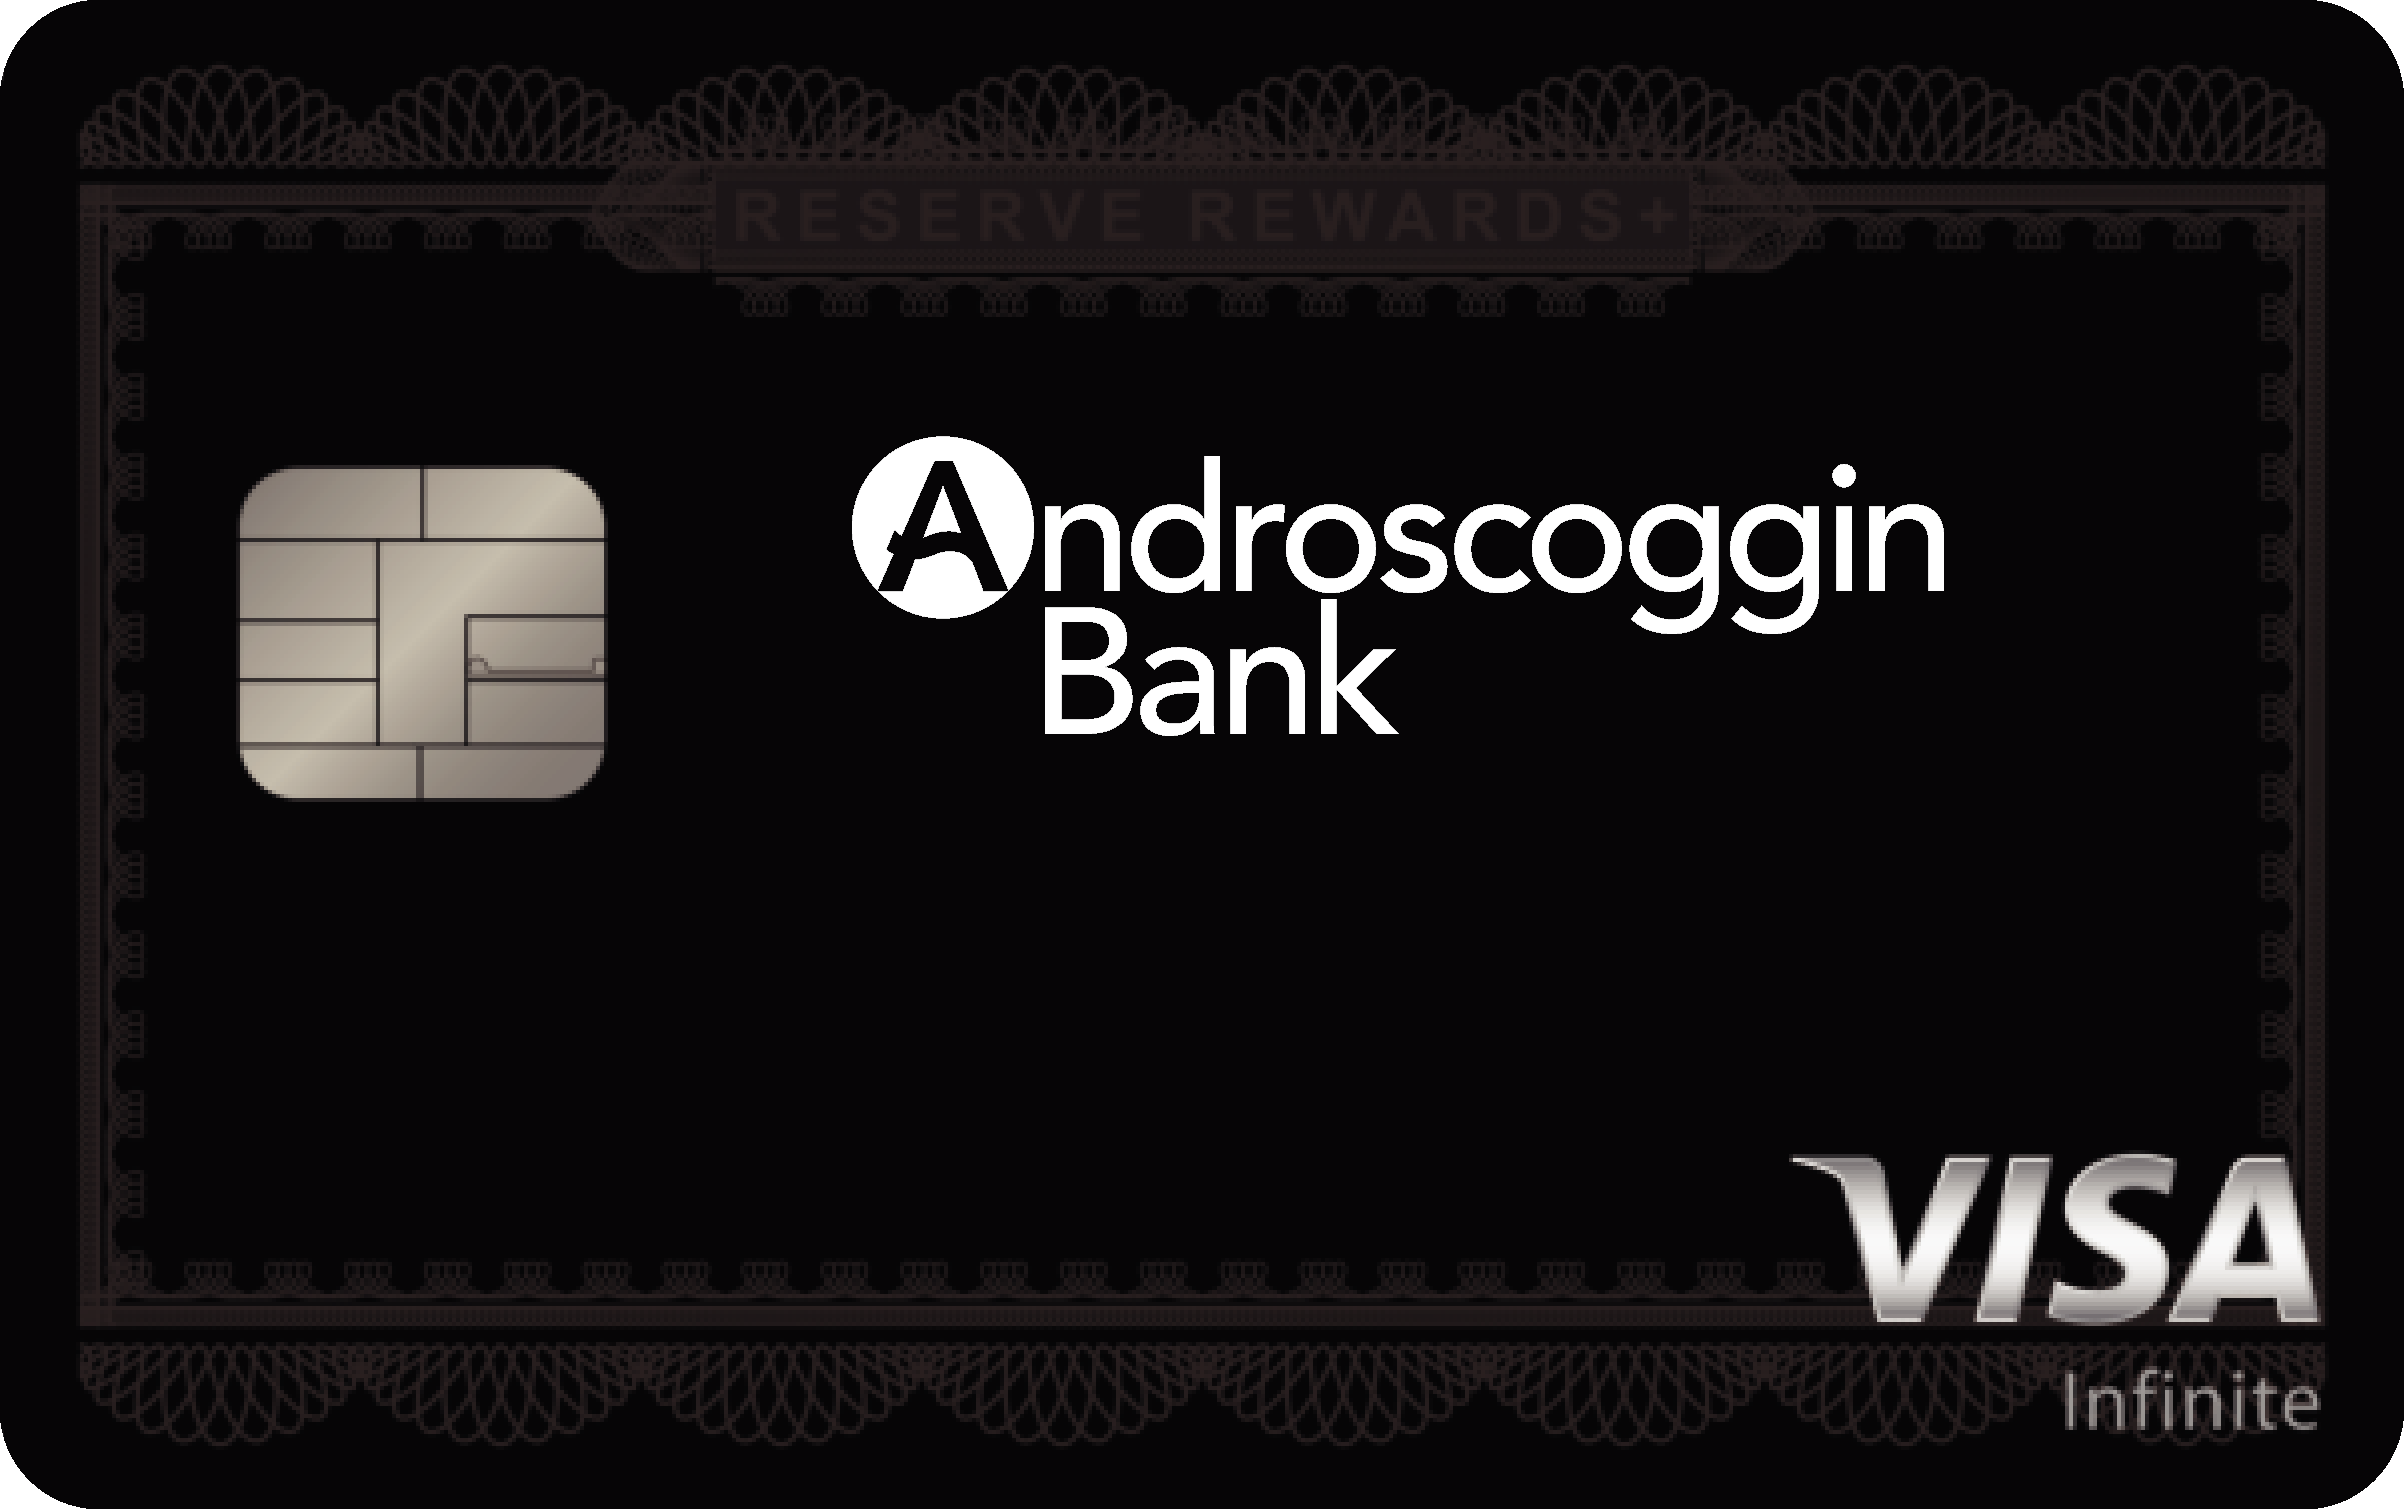 Androscoggin Bank